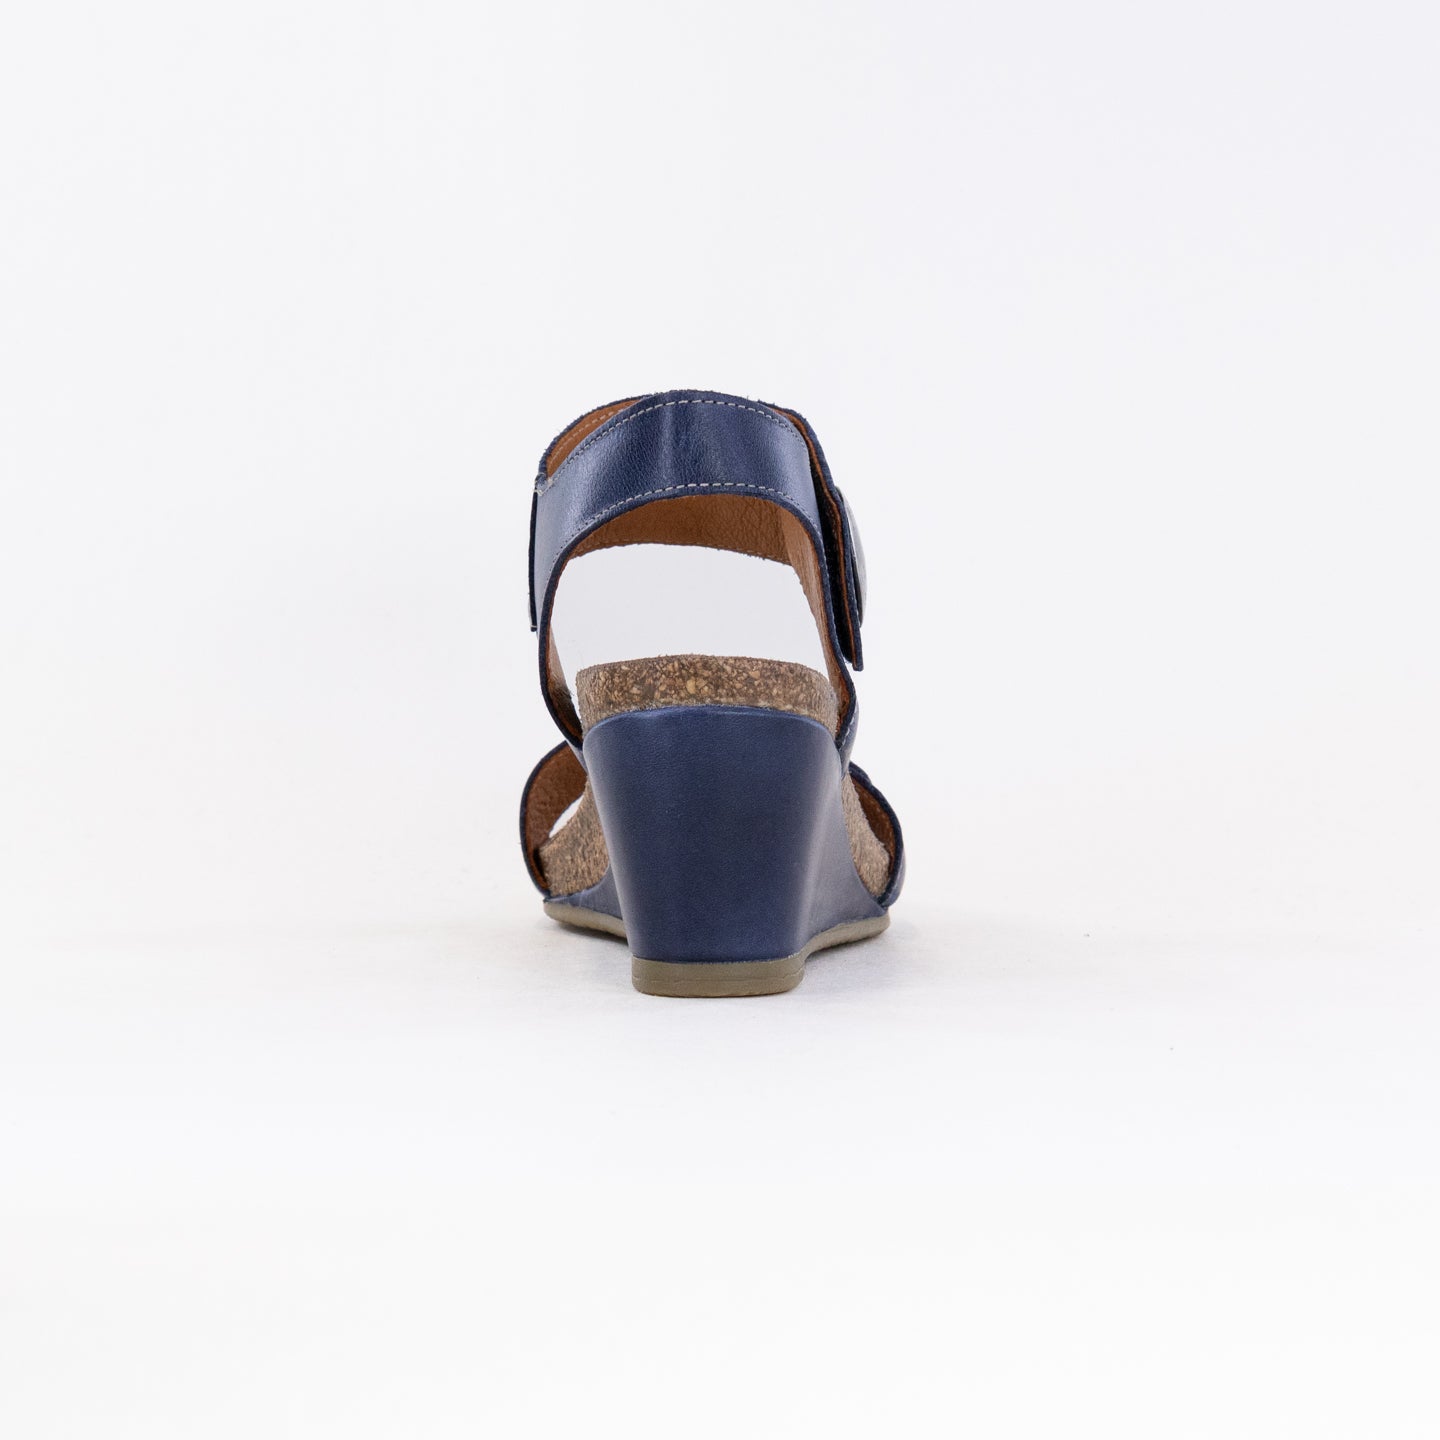 Taos Carousel 3 Wedge Sandal (Women's) - Dark Blue Leather